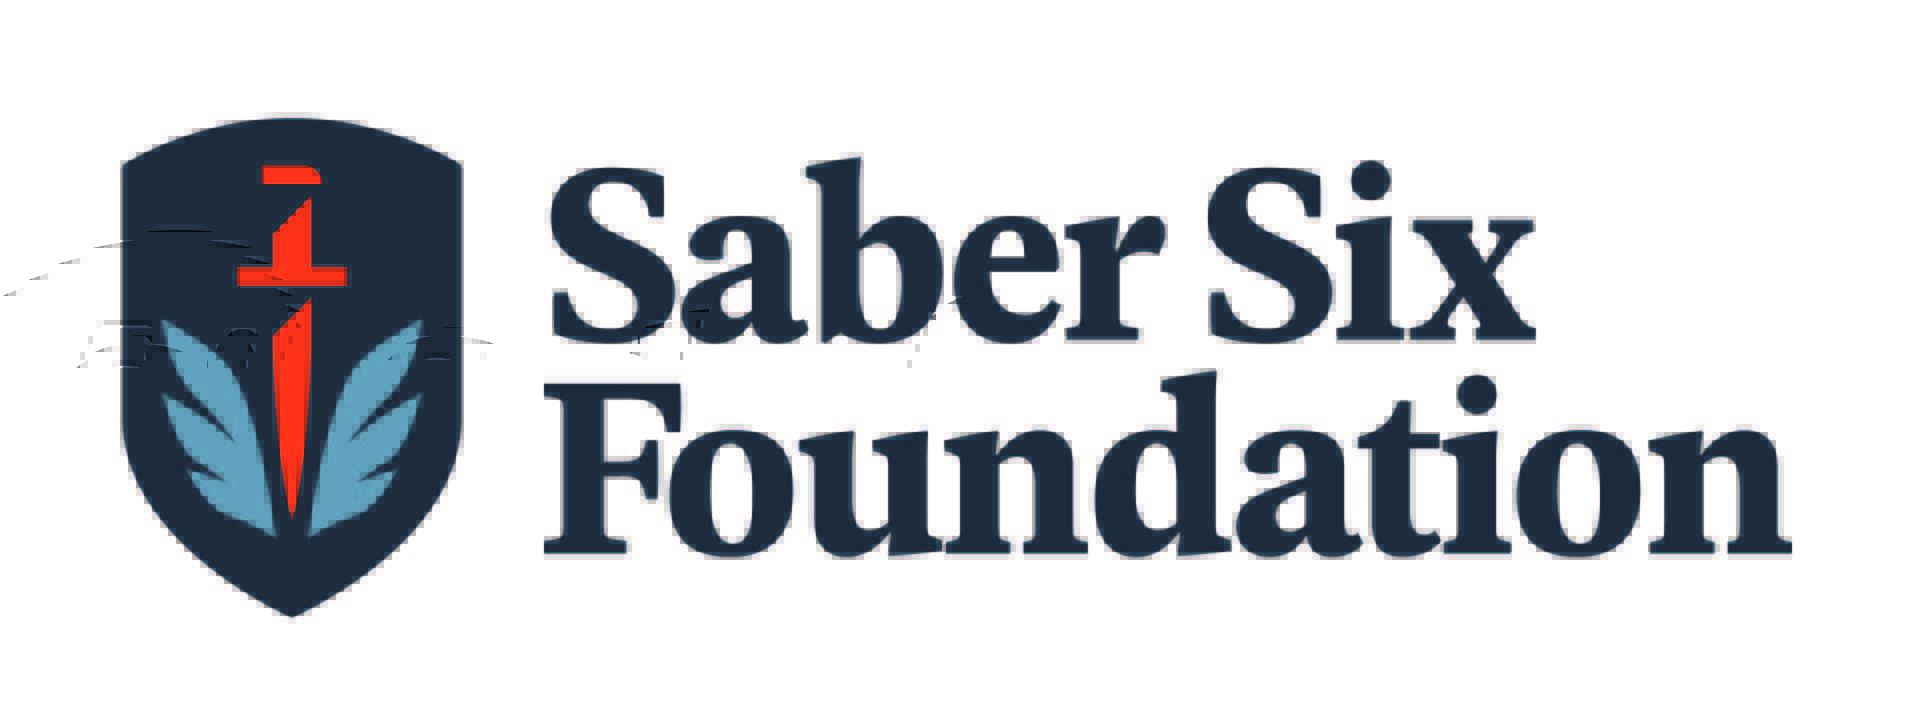 saber six foundation